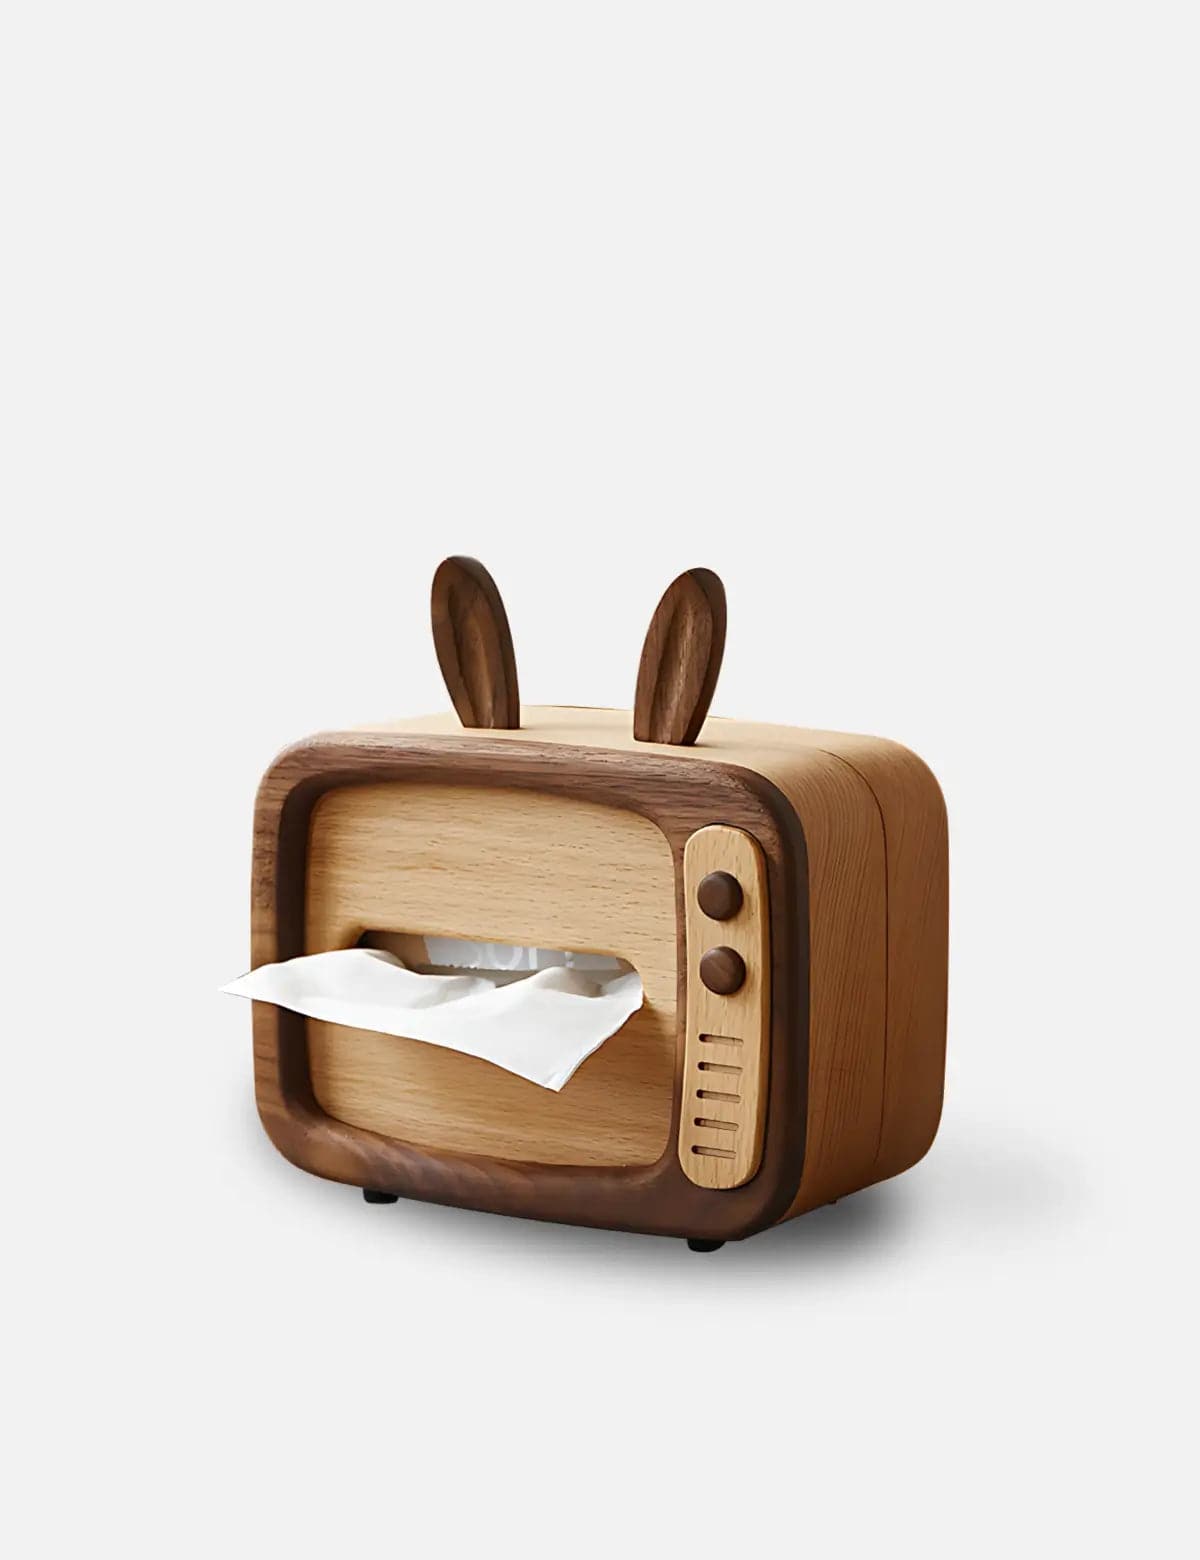 tv-rabbit-wooden-tissue-box-home-accessory-01